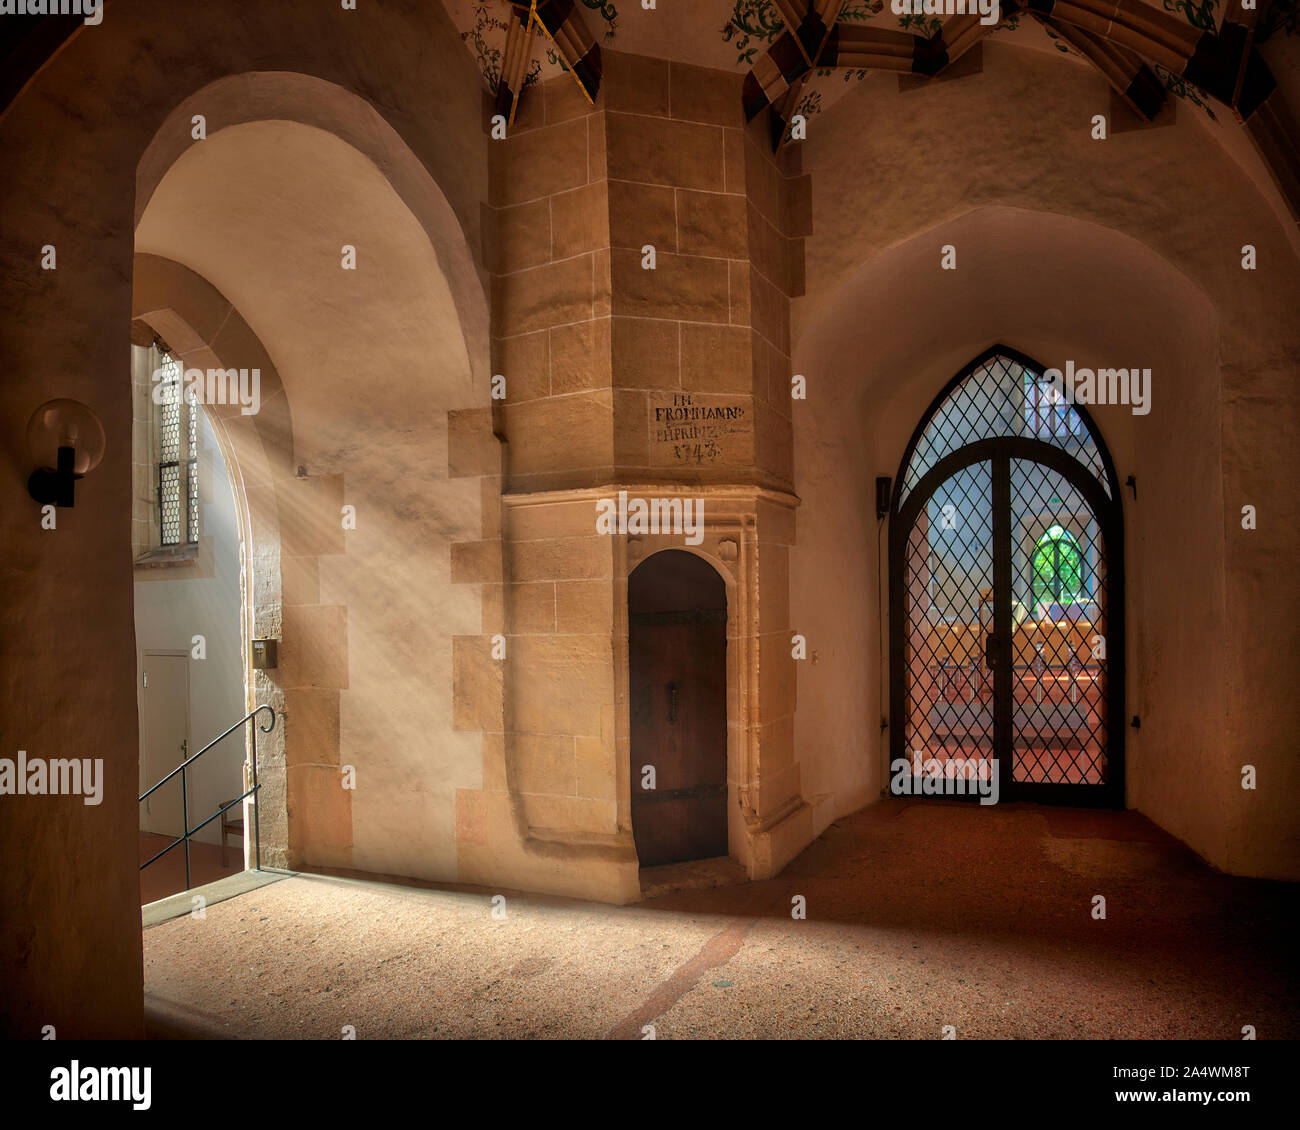 DE - BADEN-WÜRTTEMBERG: Corridoio interno della storica Blaubeuren Abbey Foto Stock